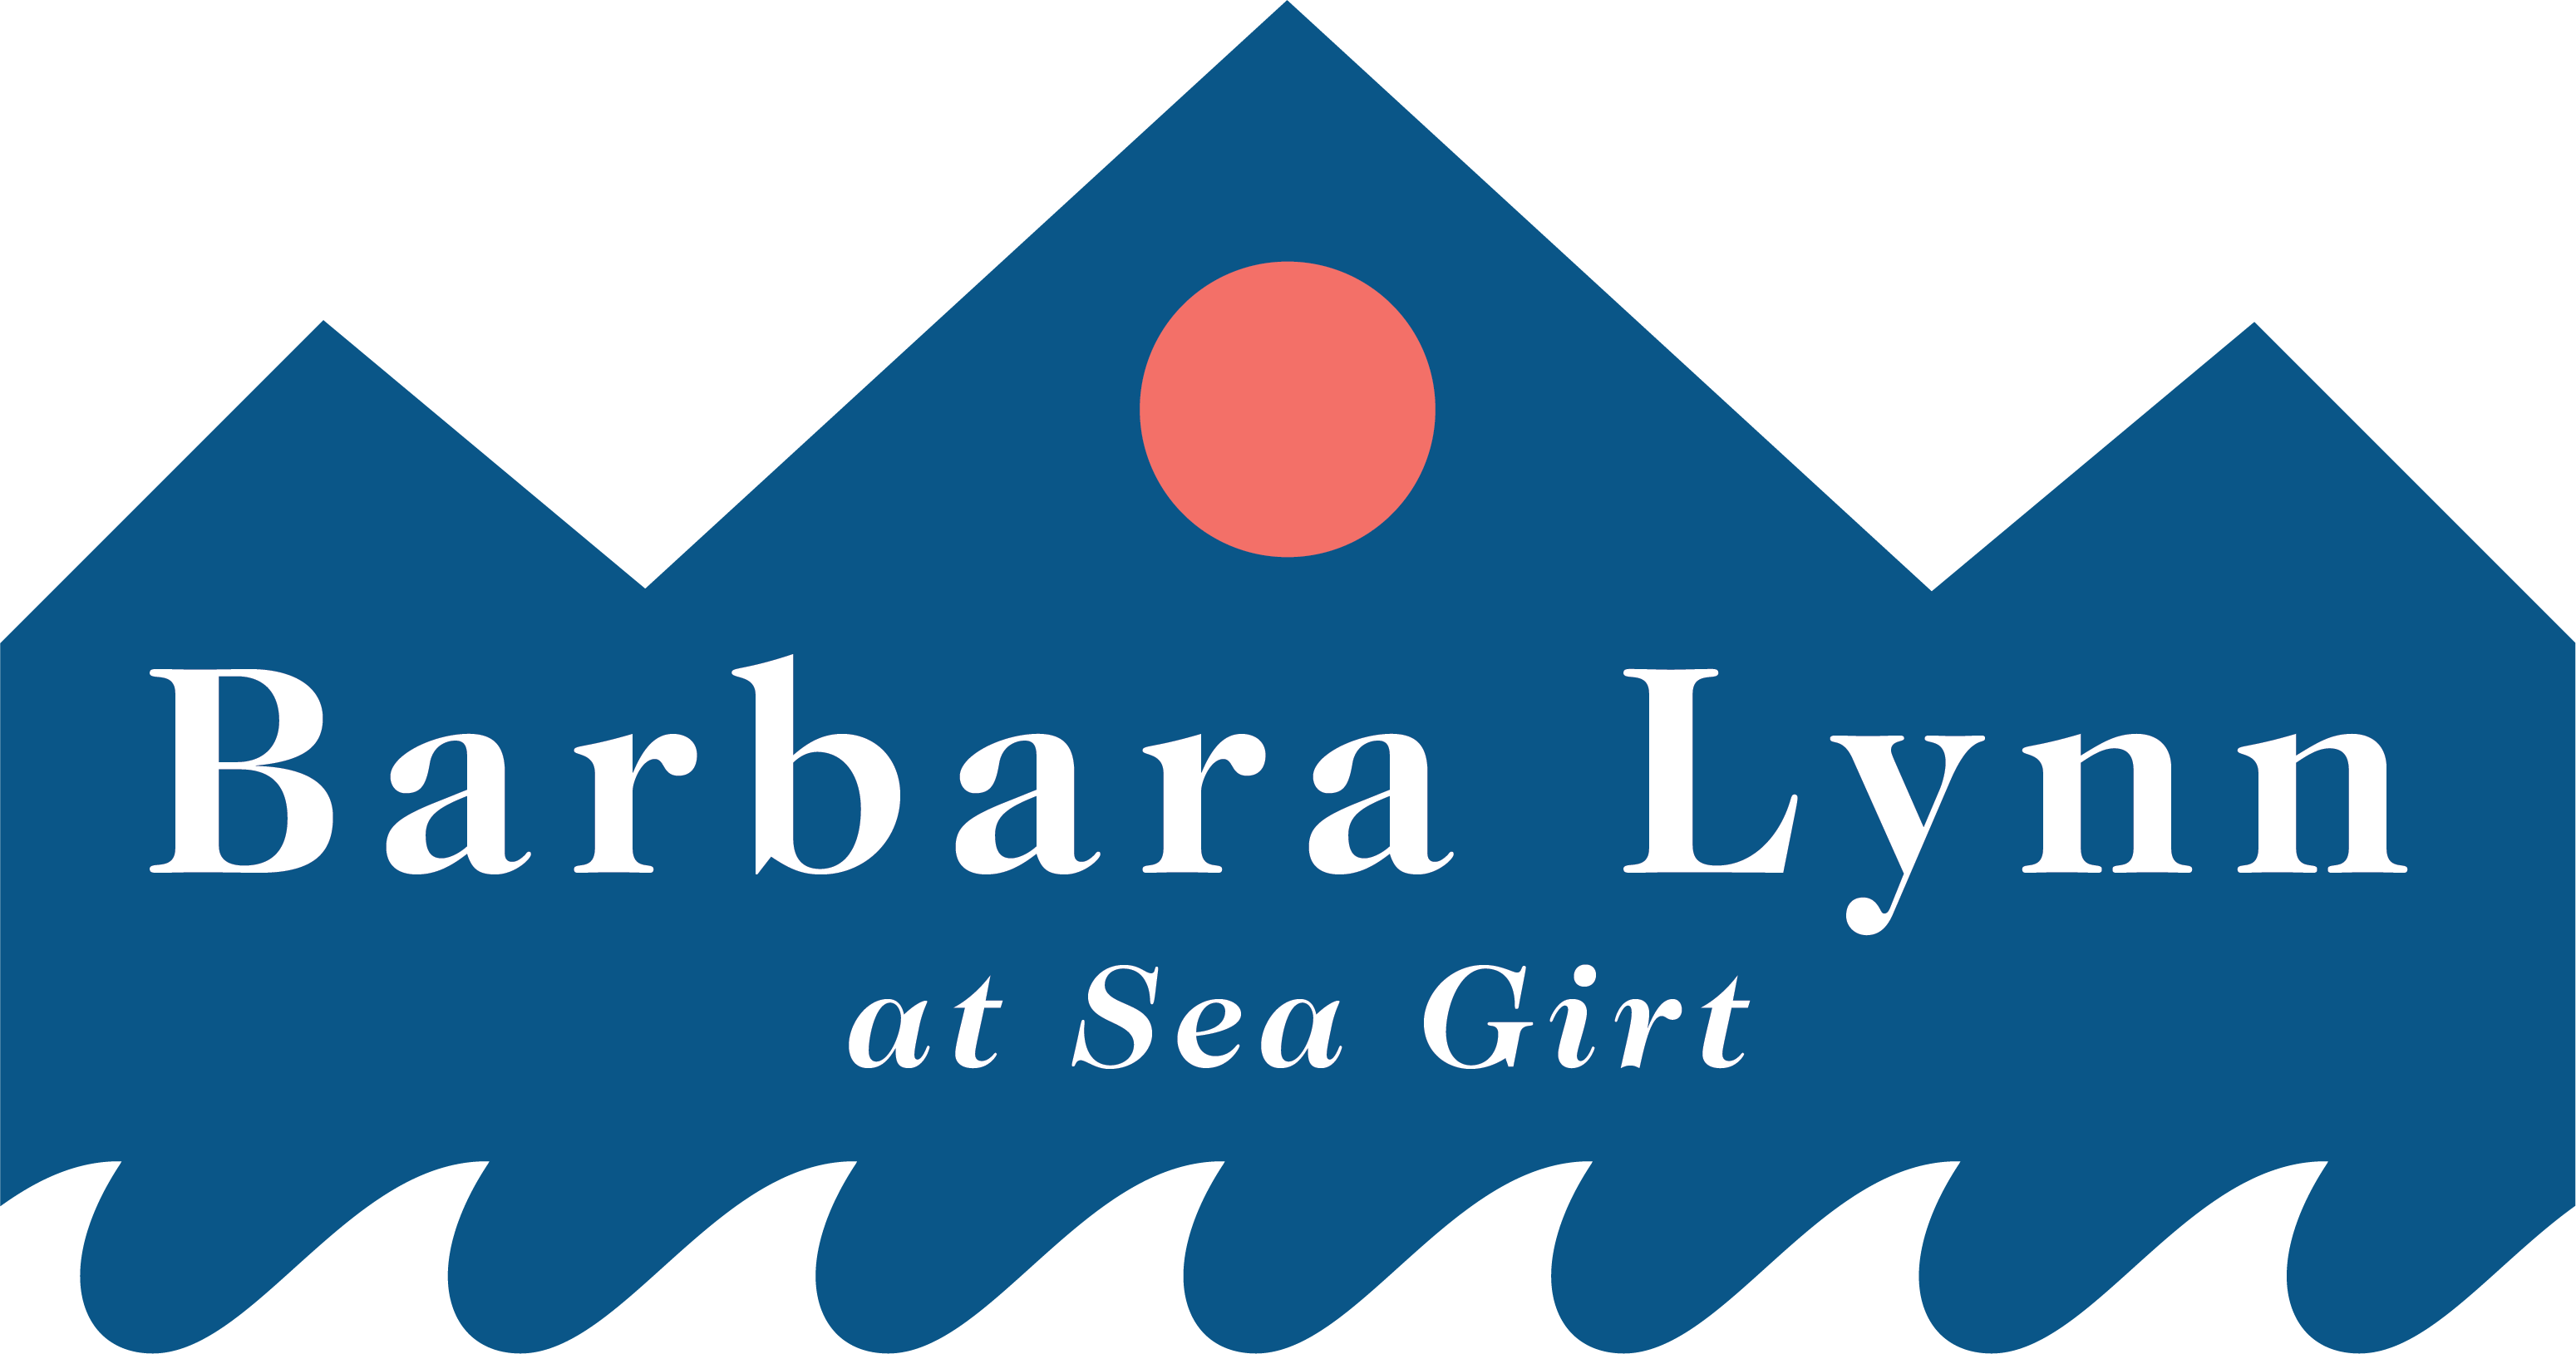 Barbara Lynn at Sea Girt Logo